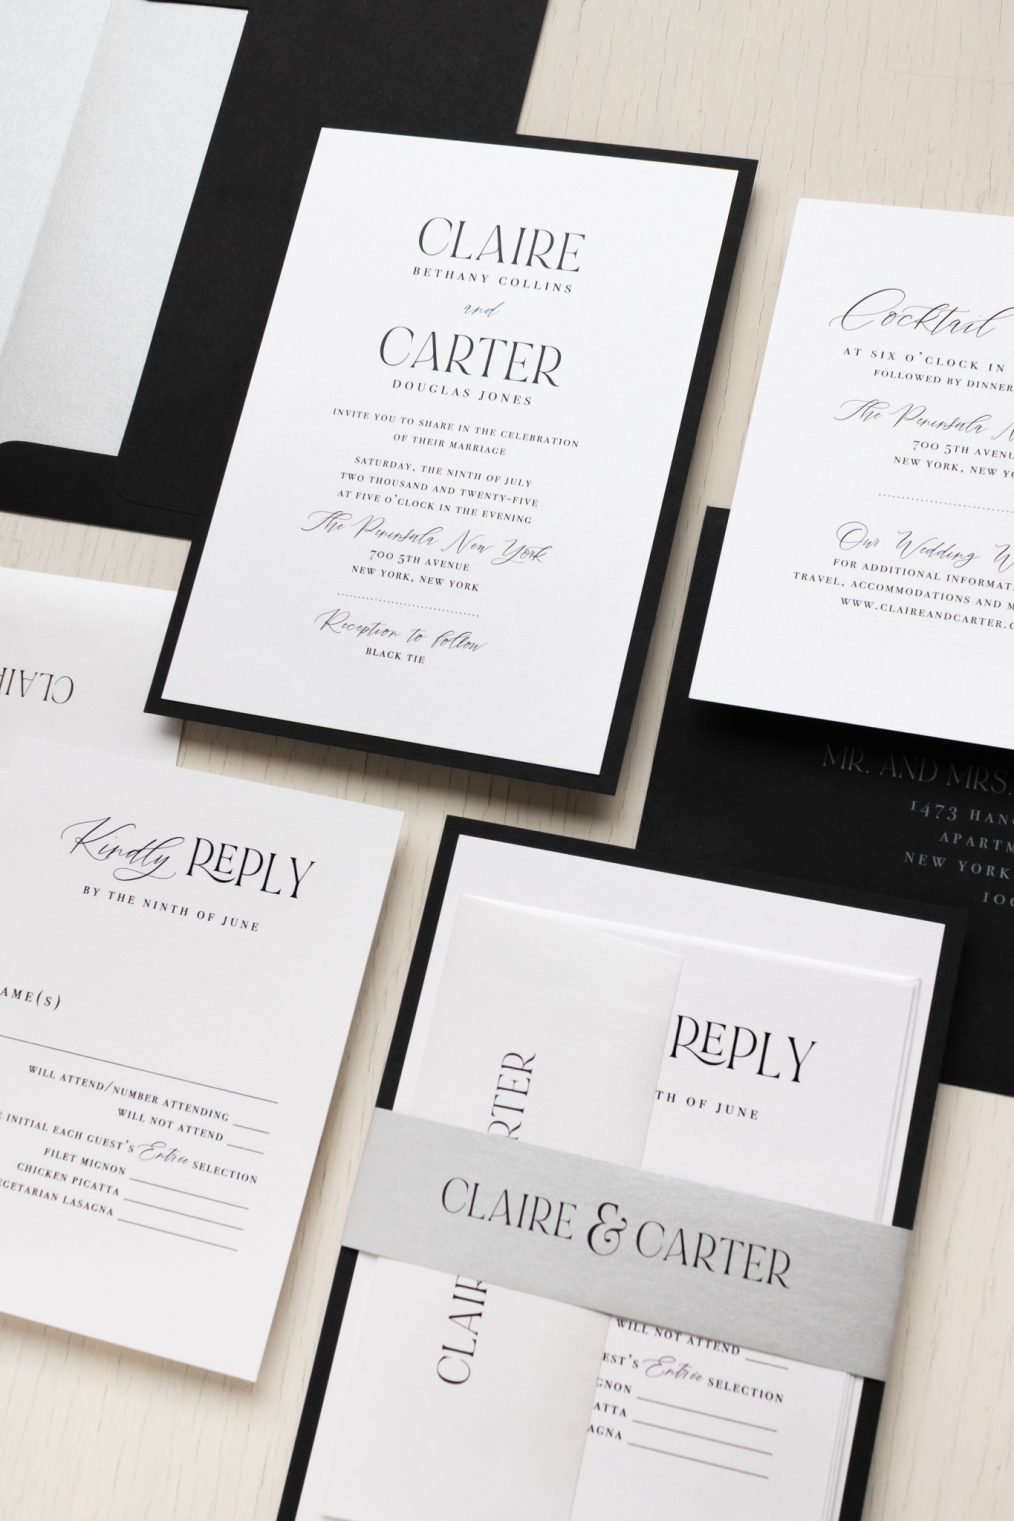 Elegant Black & White wedding invitations